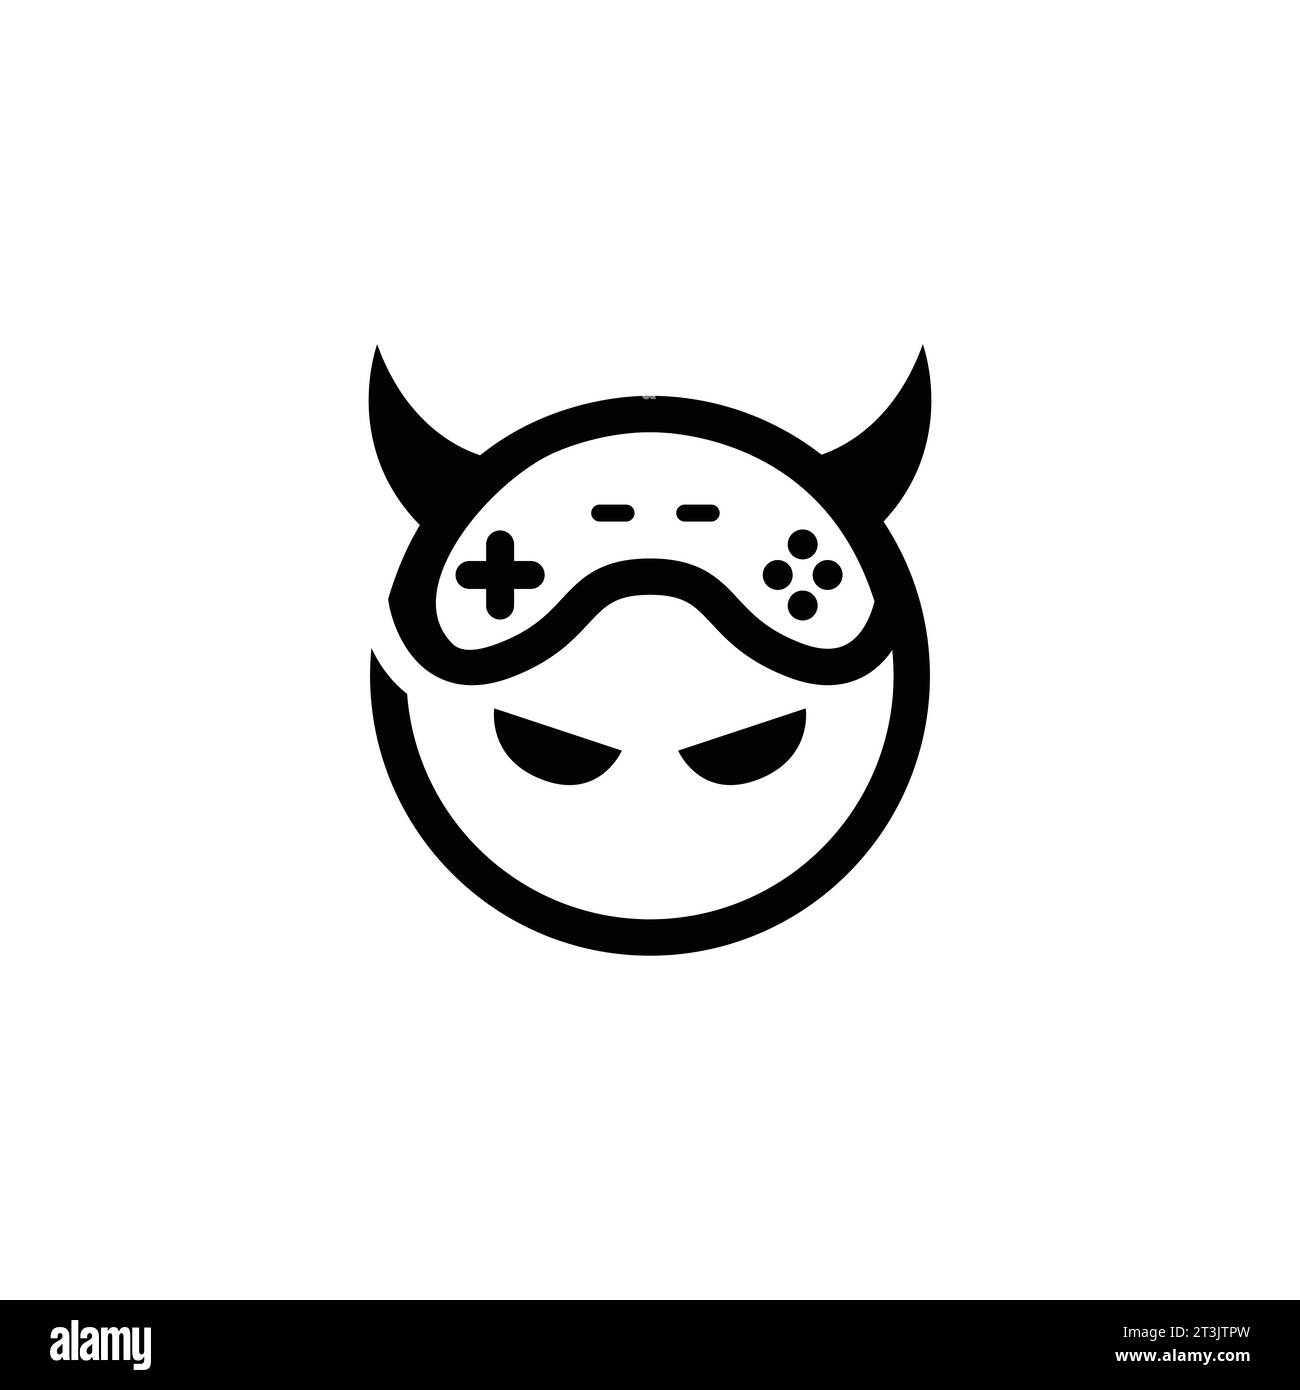 Devil game logo vector image. Simple minimalist devil joystick gamepad gaming logo design Stock Vector